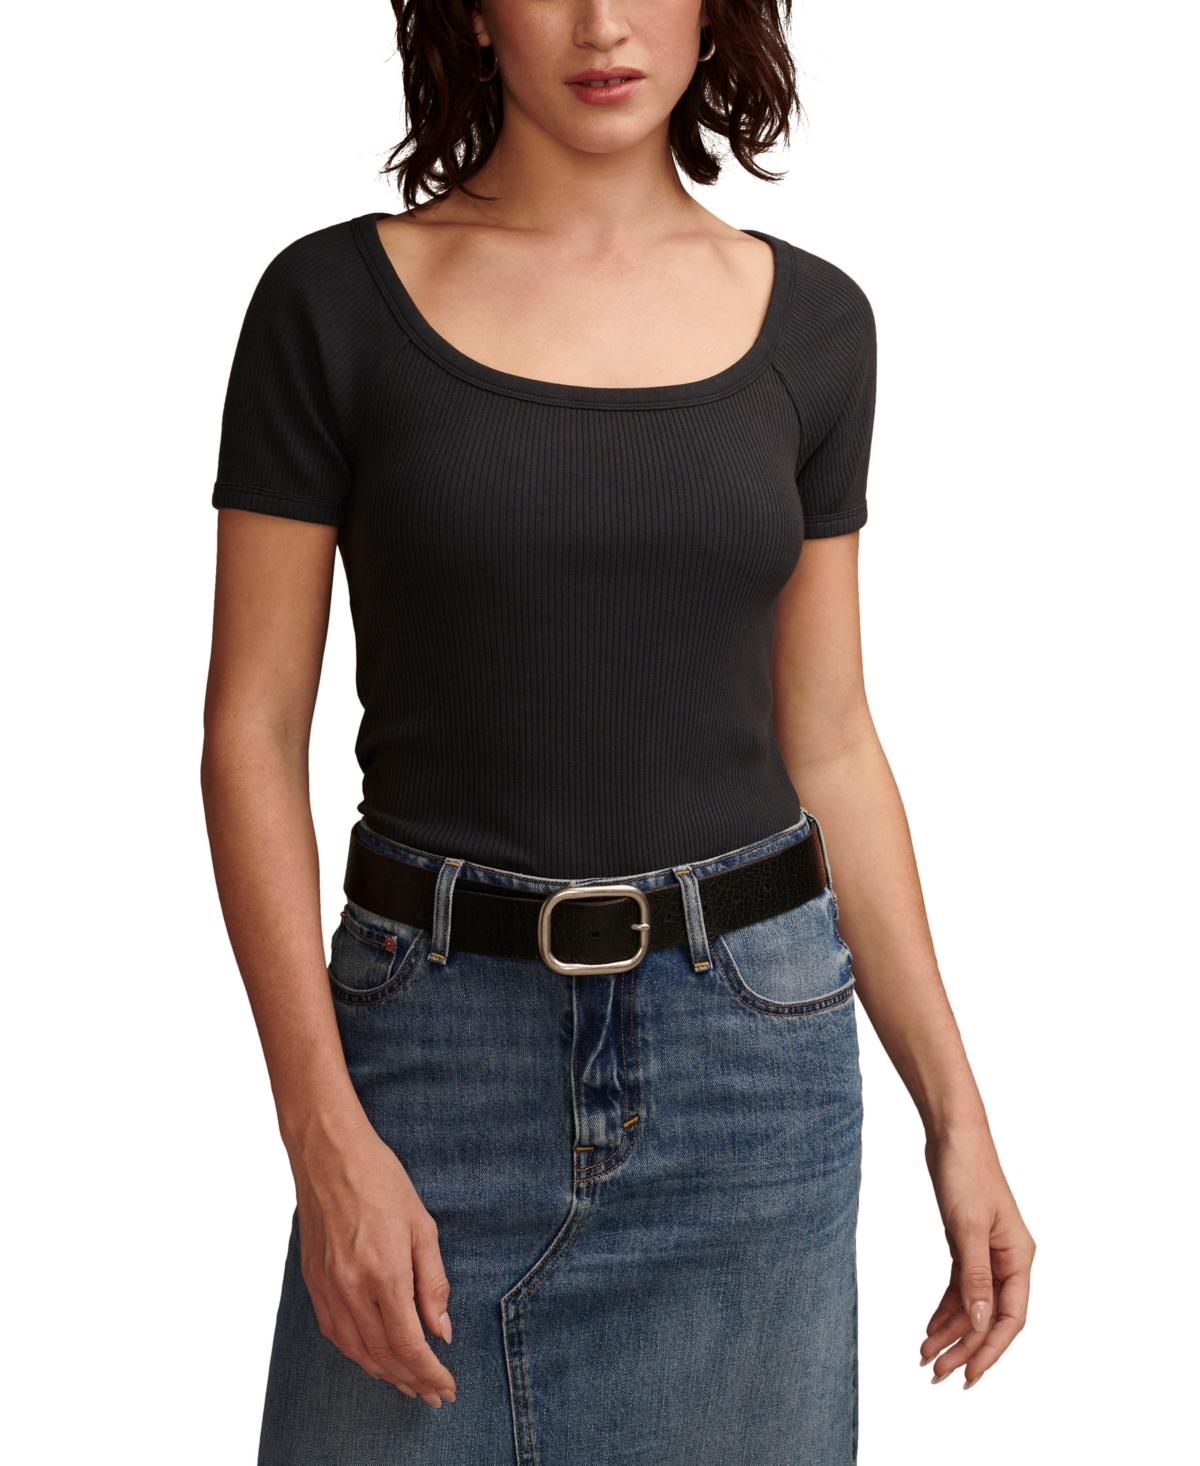 Women's Short-Sleeve Rib-Knit Top - Jet Black